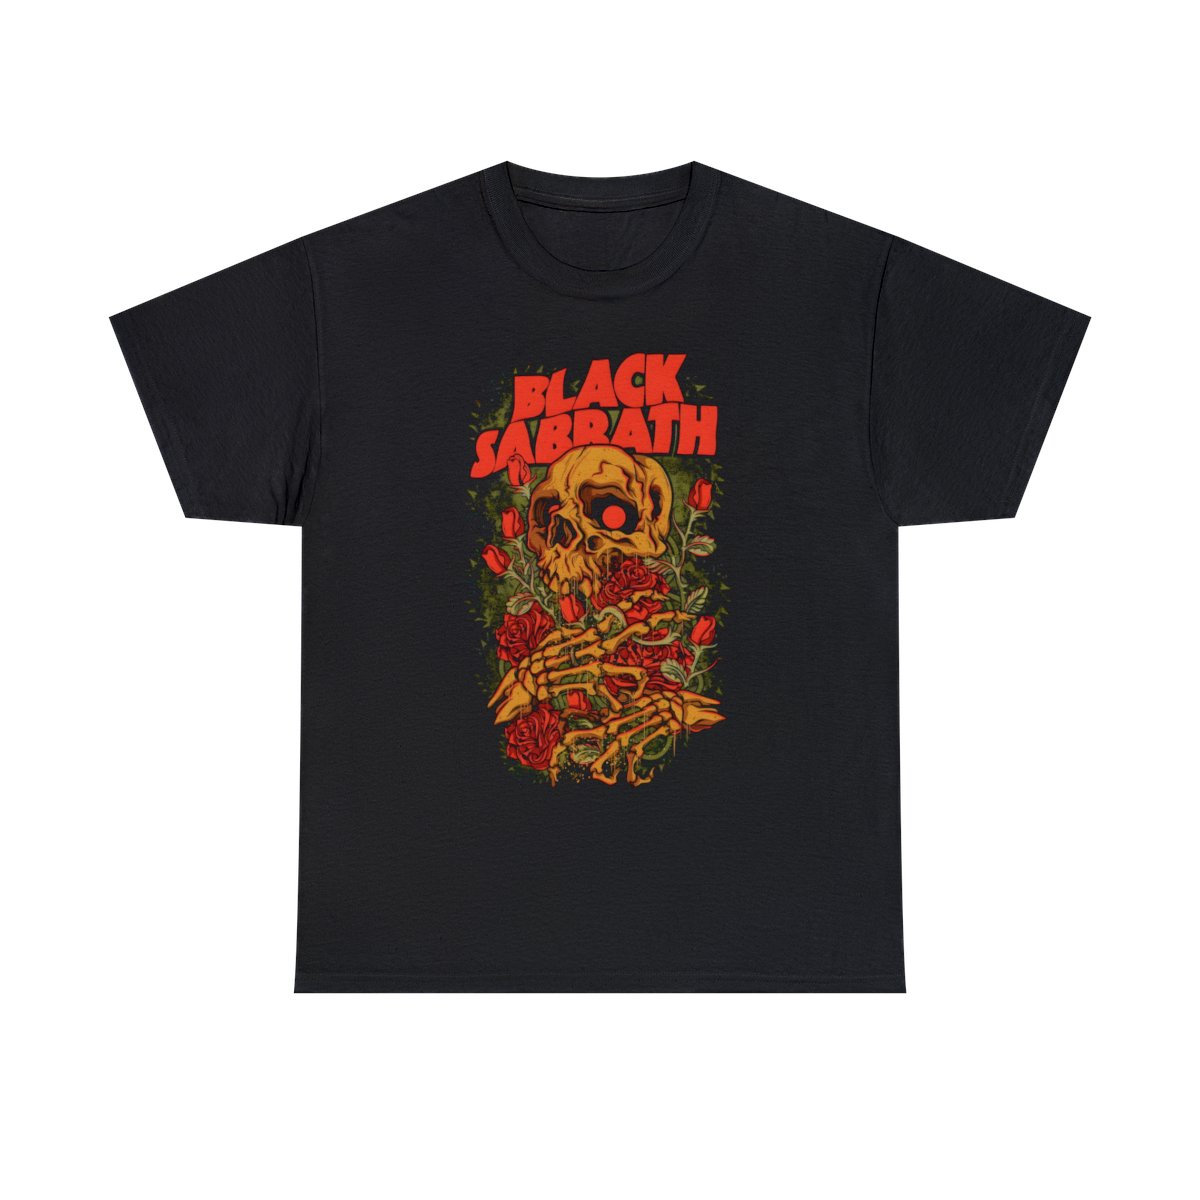 Skull and Roses Black Sabbath T-Shirt, Black Sabbath tour Gift Tee for Men Women Unisex Heavy Cotton Tee